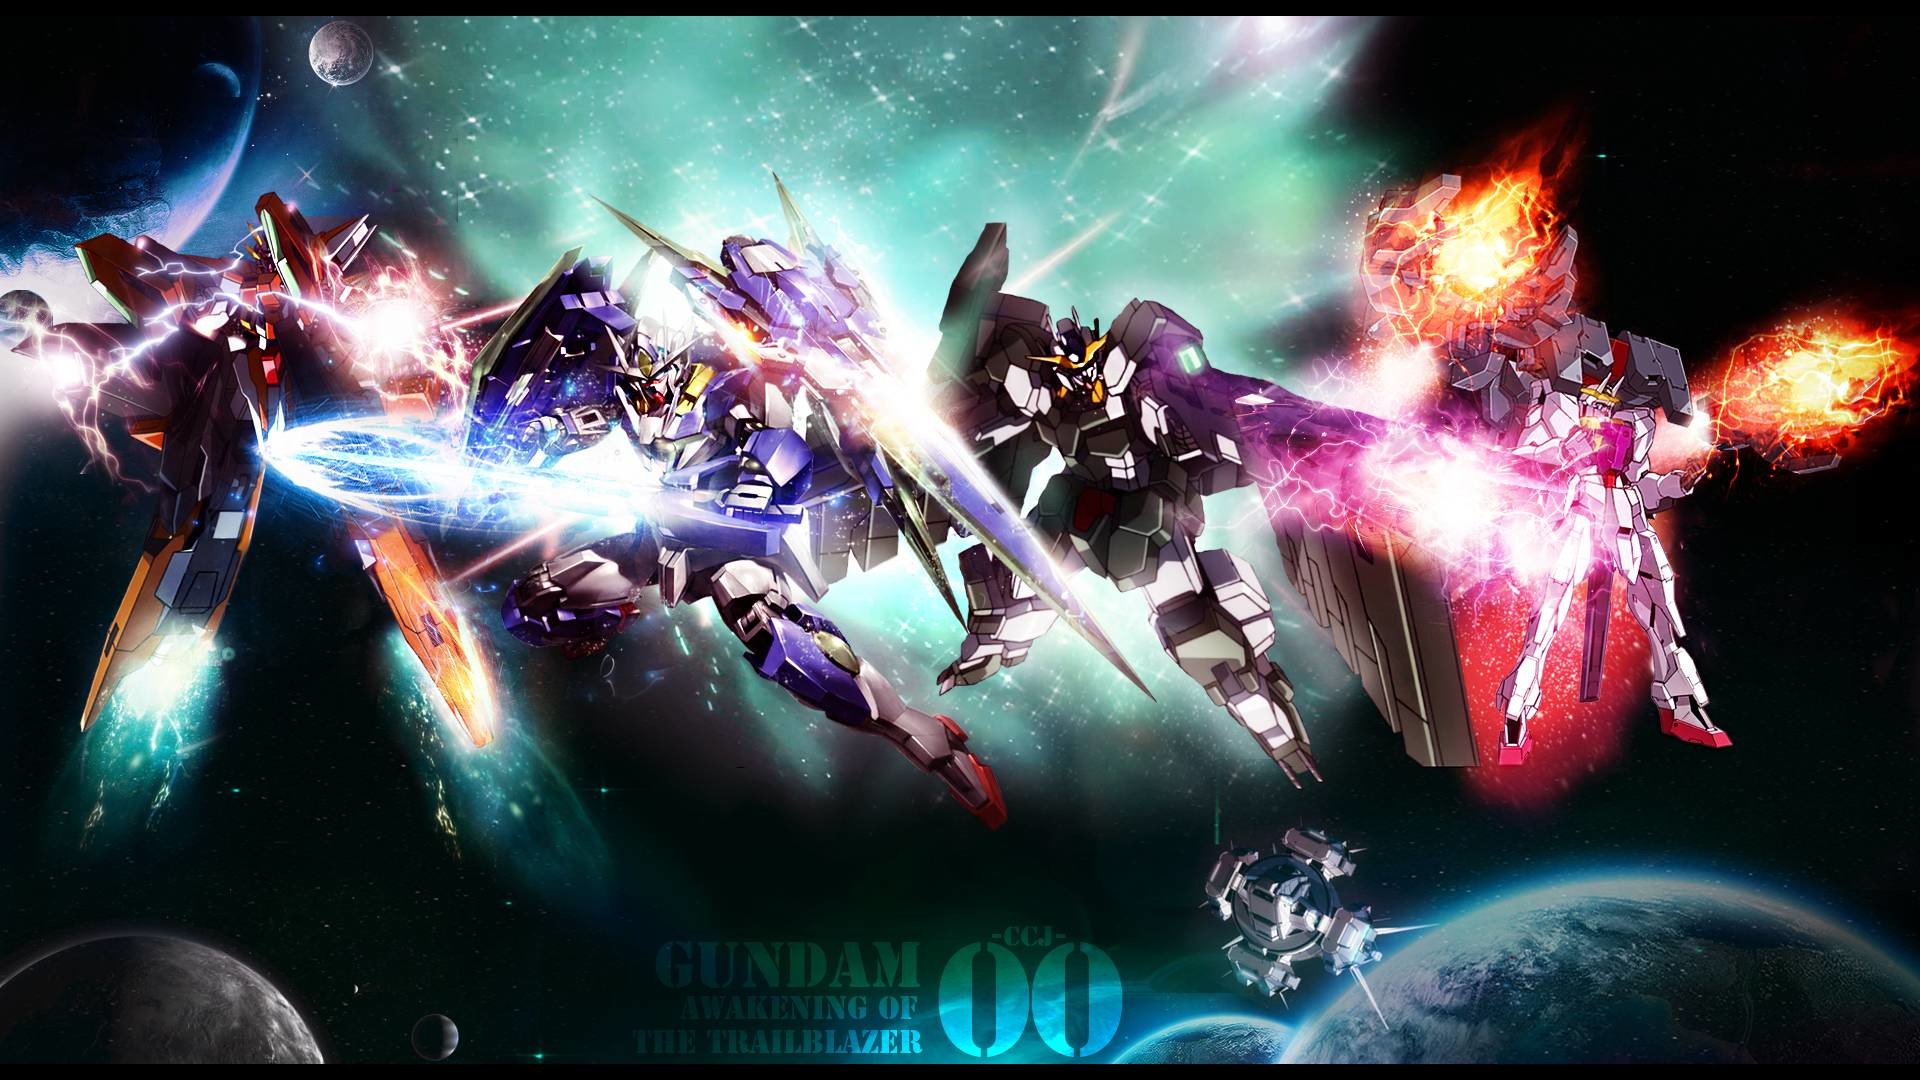 Awakening of the trailblazer – Gundam 00 Wallpaper